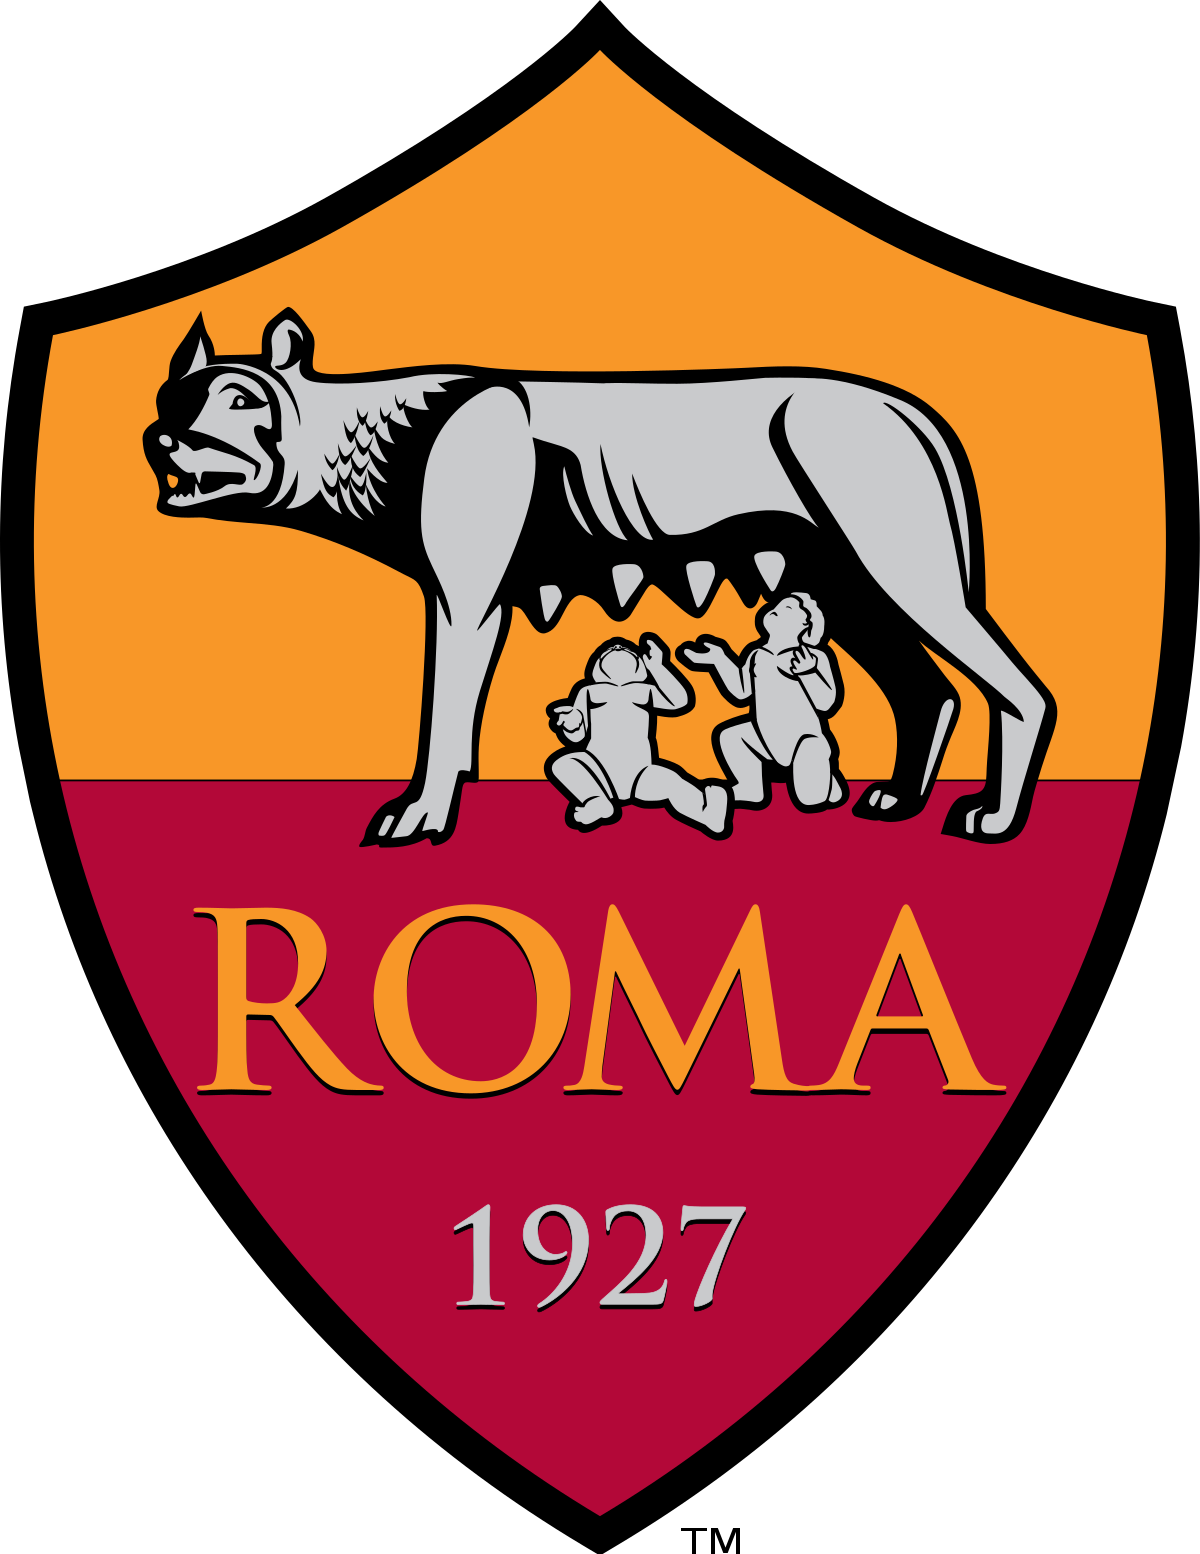 Roma Club Tangerang